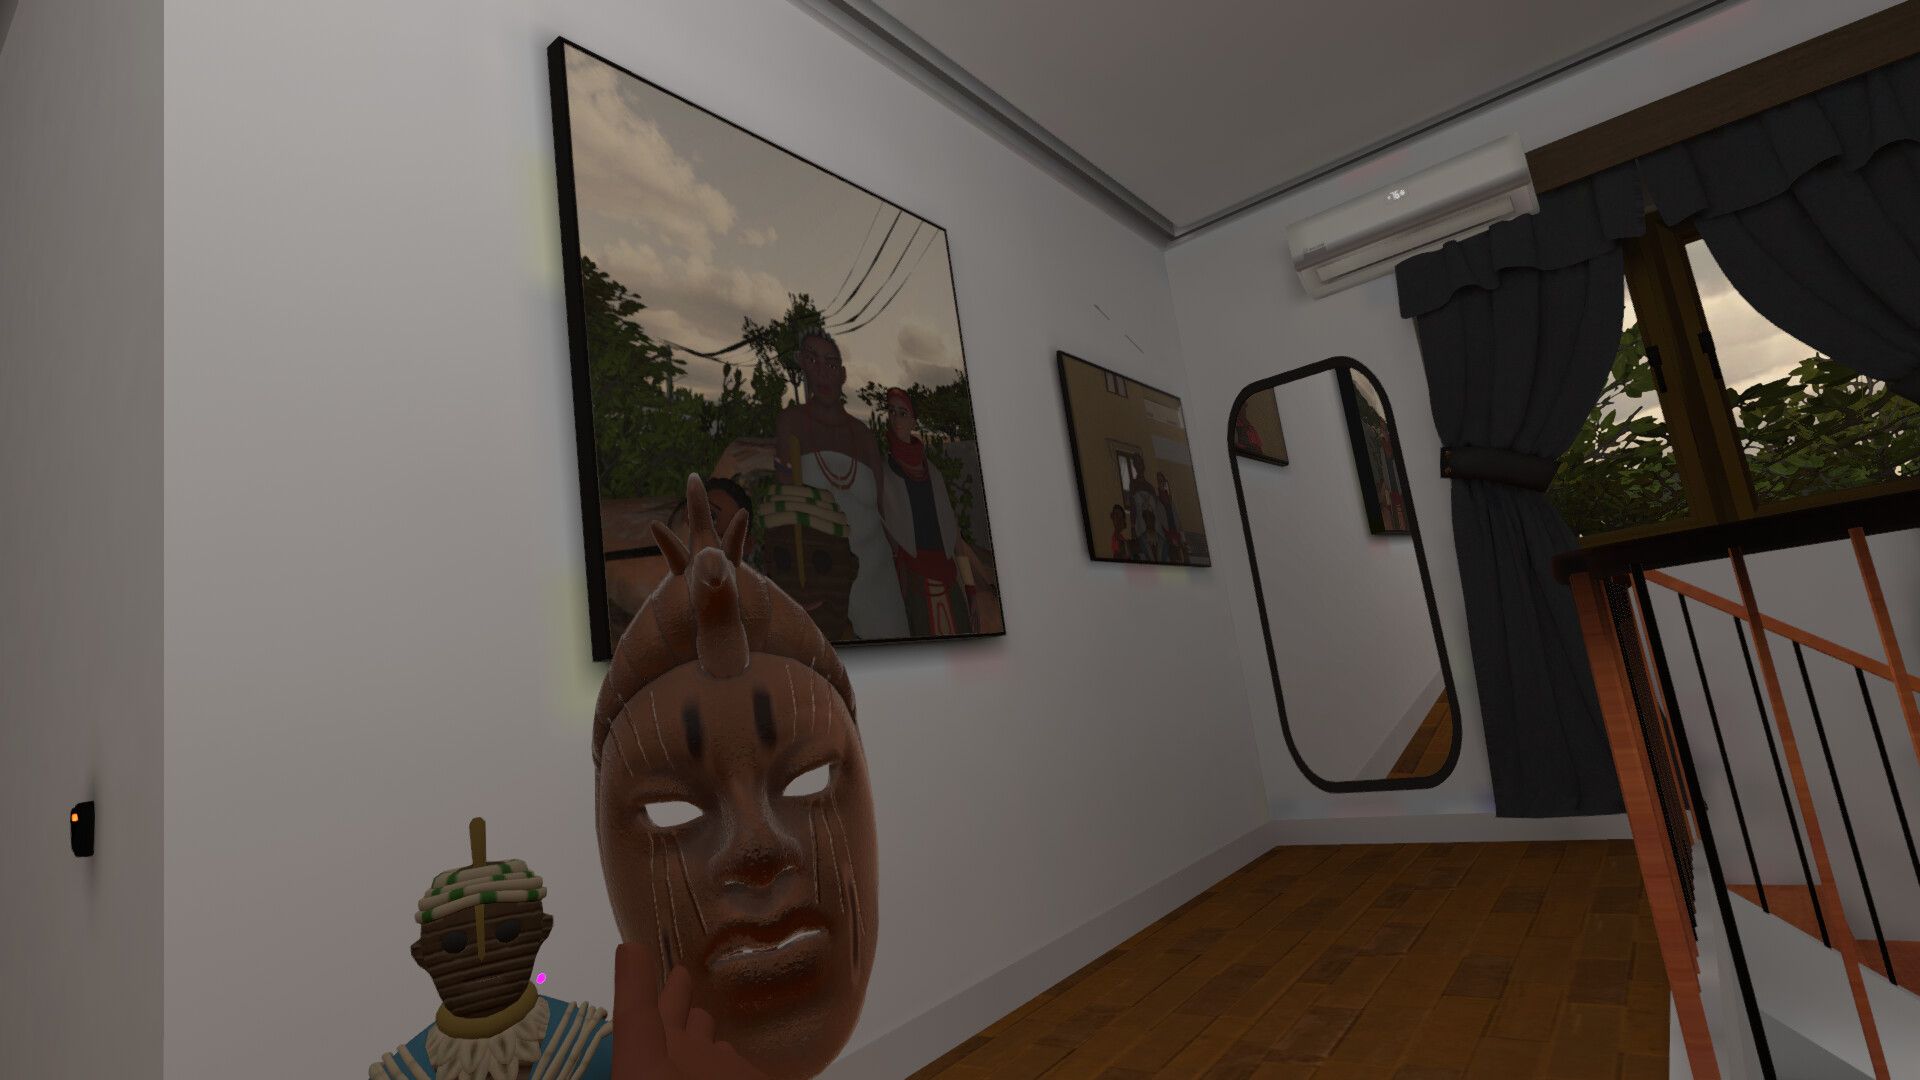 Home Is A West African PC VR Stealth Adventure, arriva nel quarto trimestre del 4